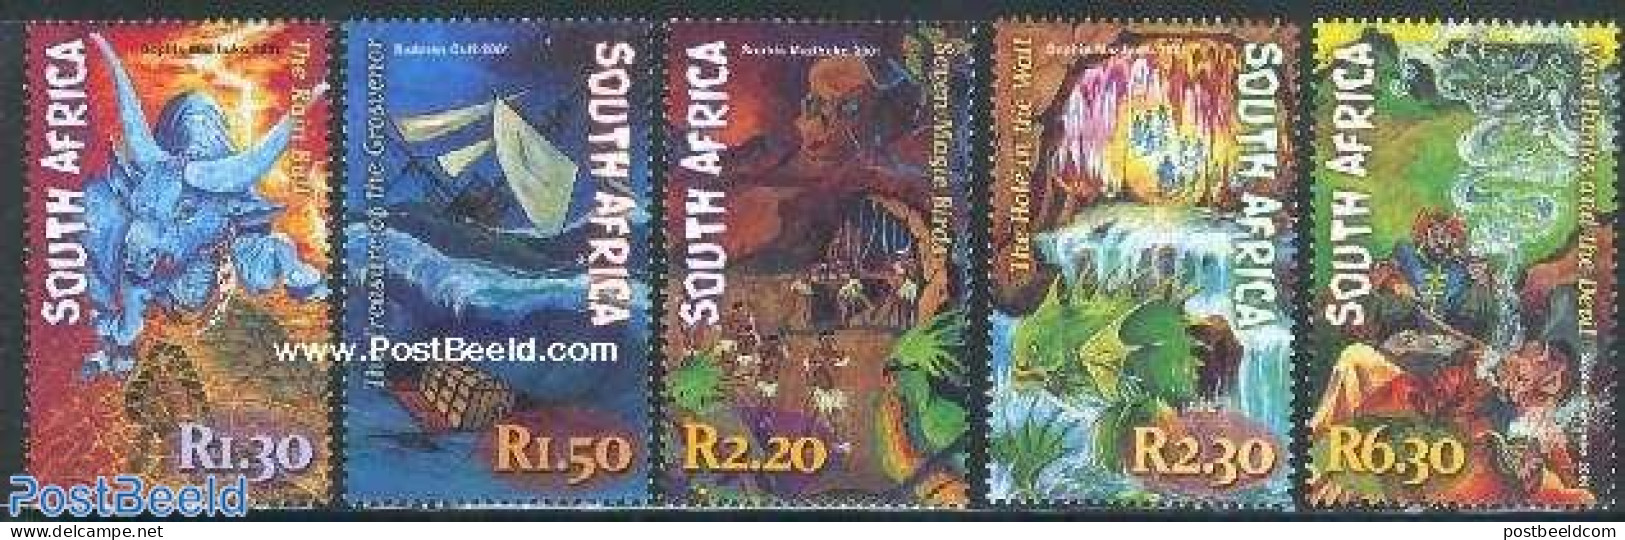 South Africa 2001 Legends 5v, Mint NH, Art - Fairytales - Nuevos